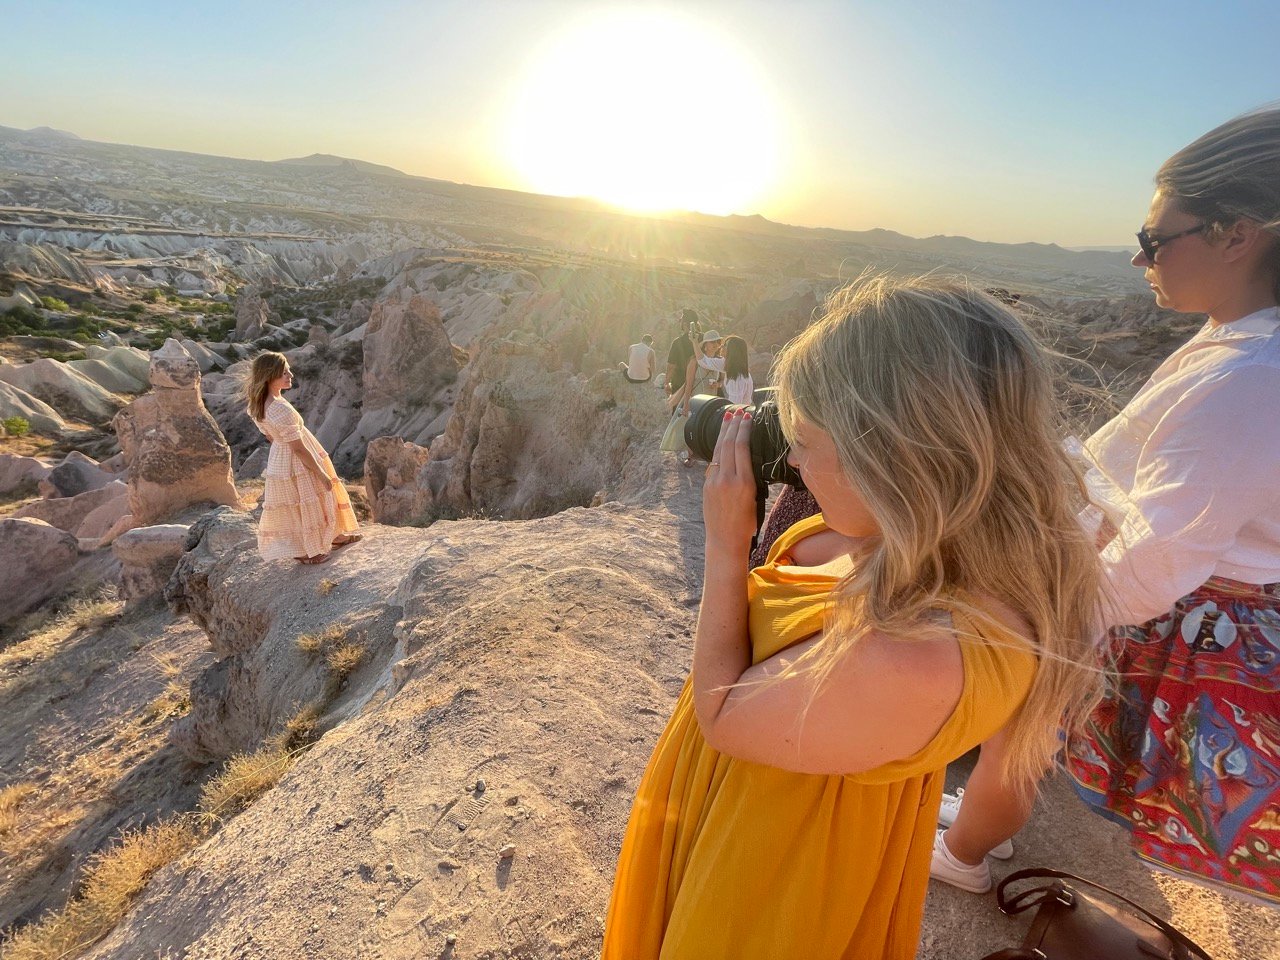 Travel influencer having photo taken in Cappadoccia, Turkey.